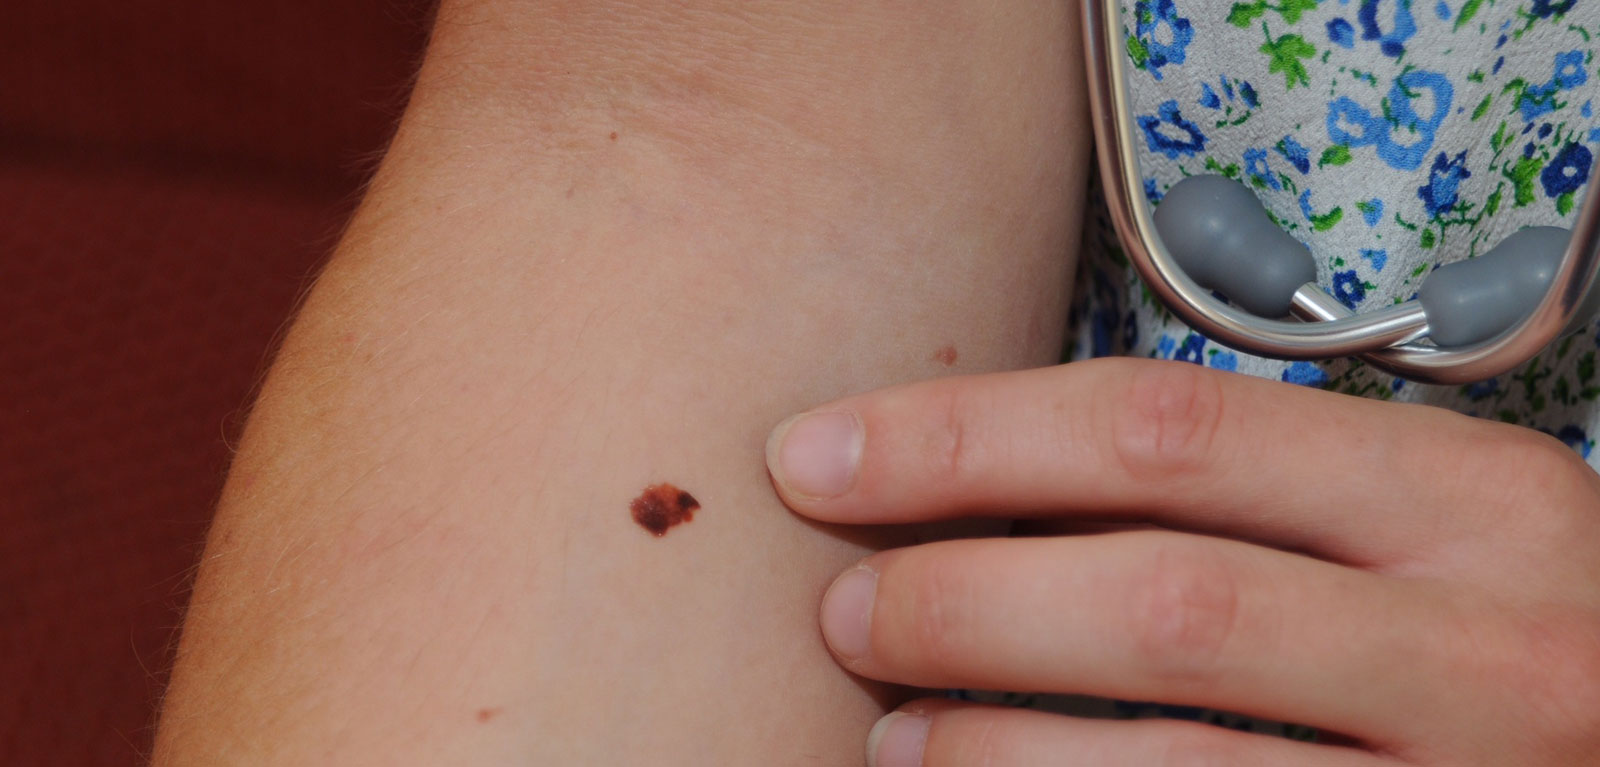 Melanoma transfer tattoo